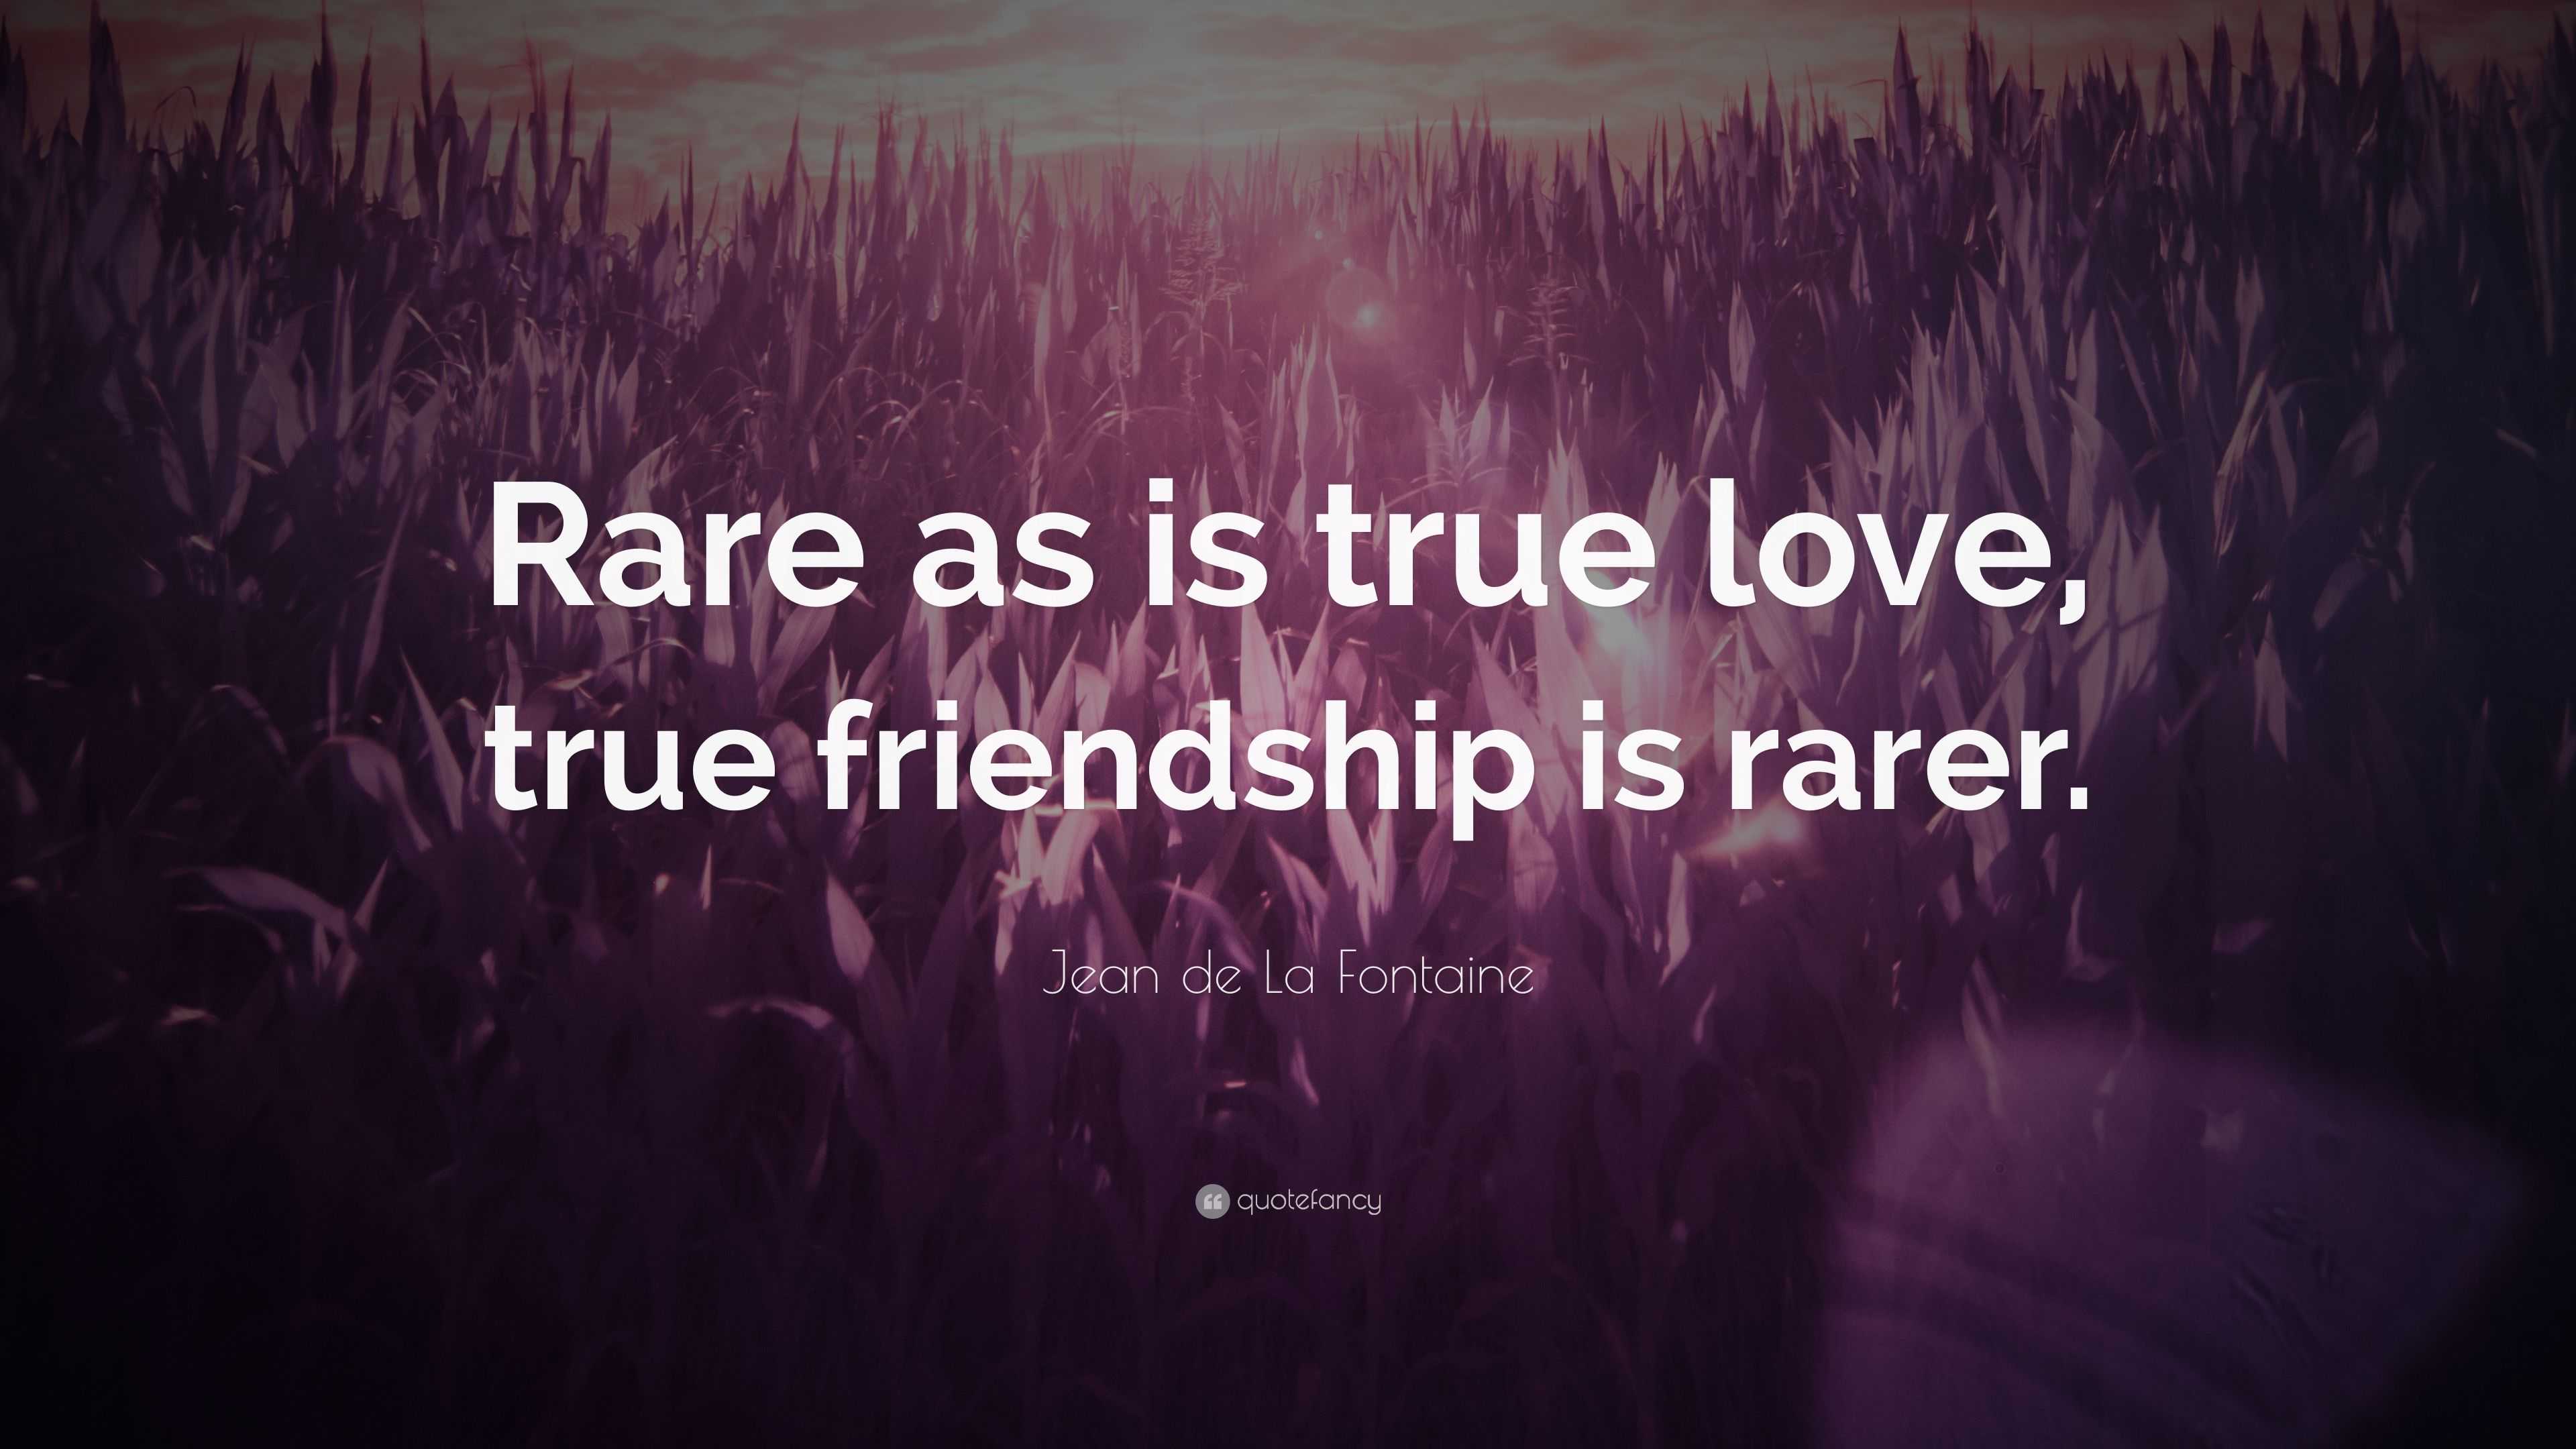 Jean de La Fontaine - Rare as is true love, true